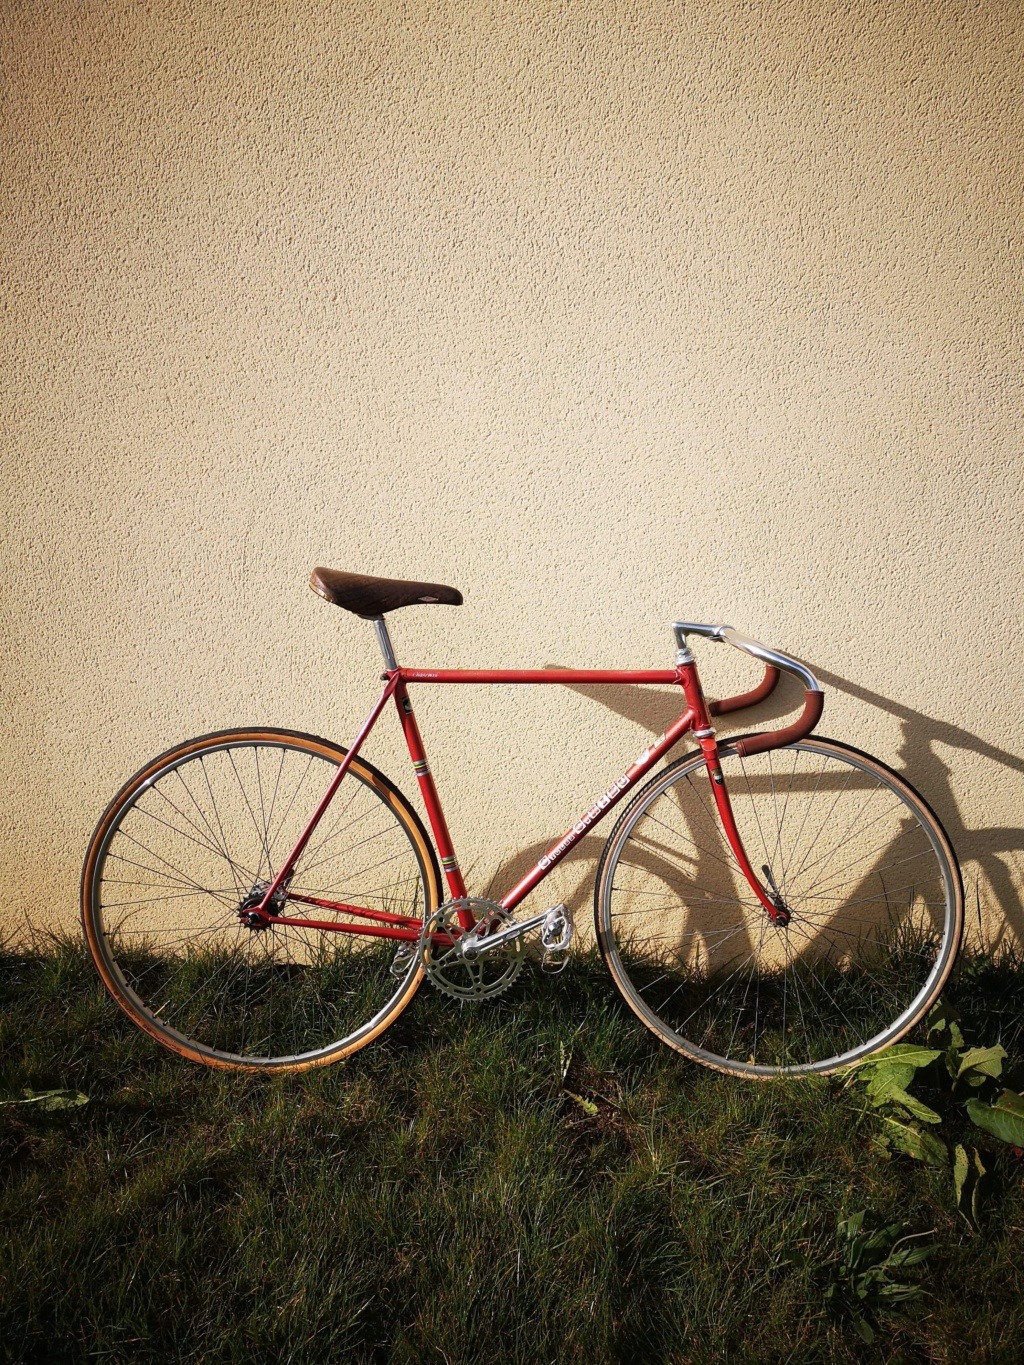 vélo - Vélo piste 70’s durifort 888 5aeceb10